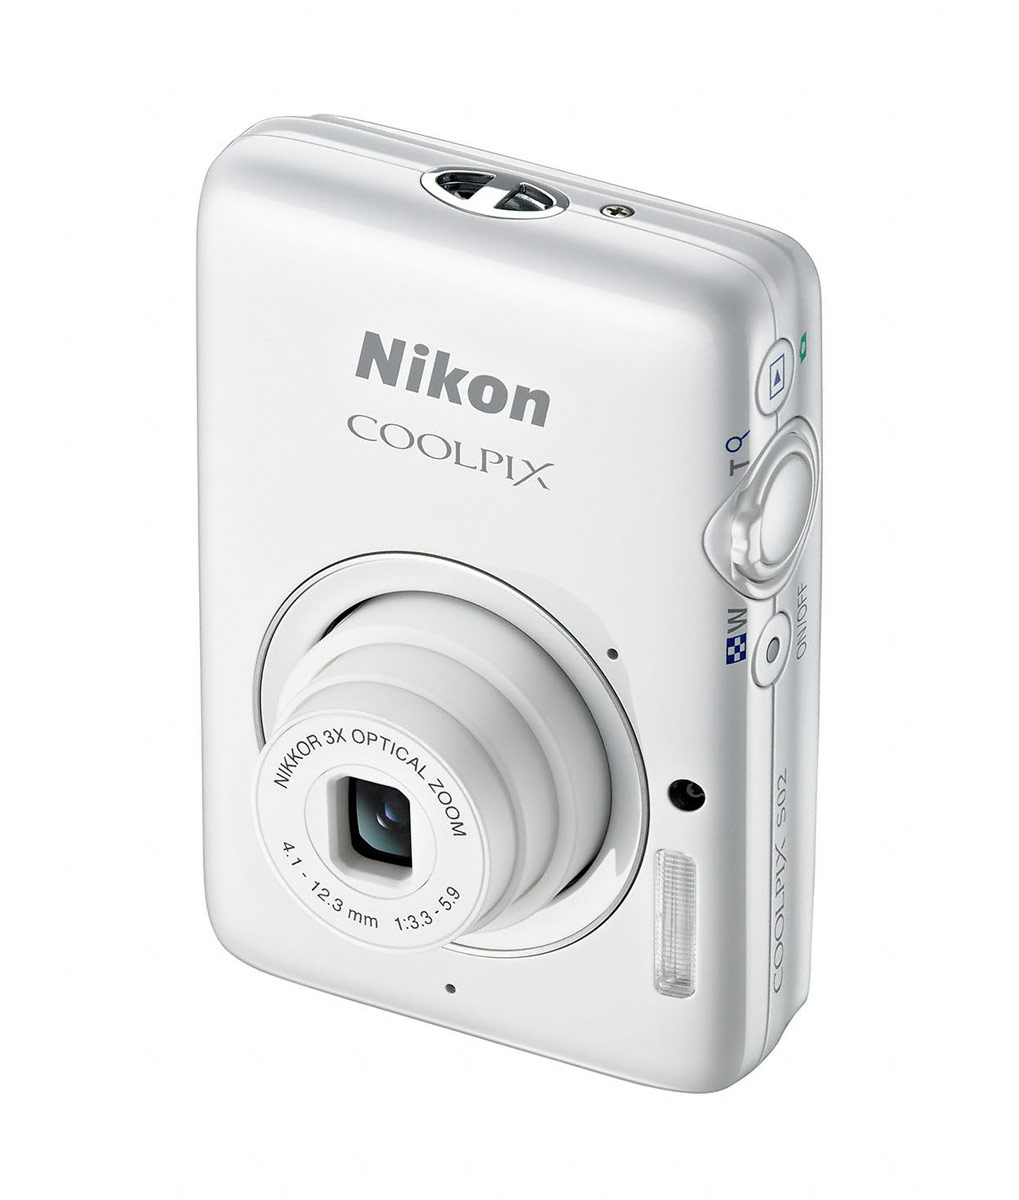 Nikon Coolpix S02 - Credtit Card-Sized Camera - White